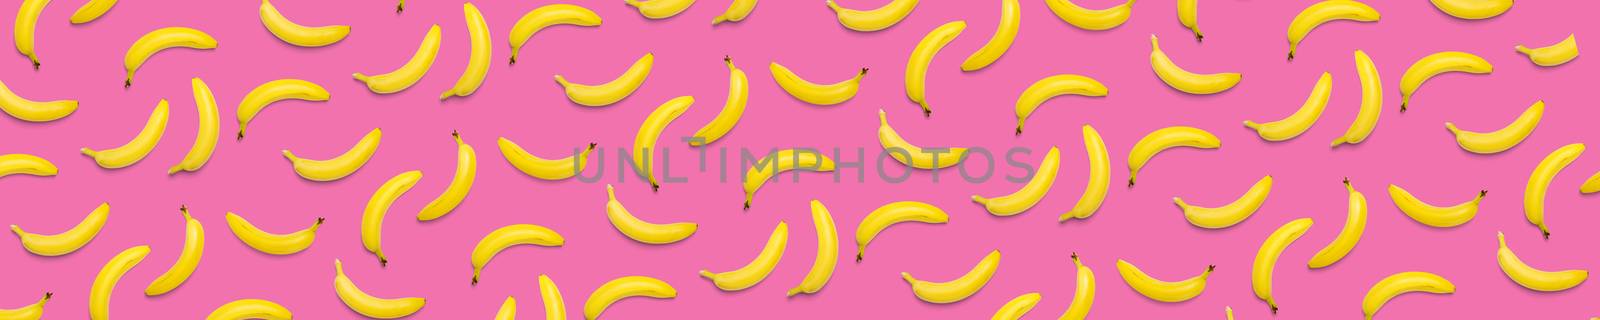 Bananas creative background. pop art bananas background. Tropical abstract background with banana. Colorful fruit yellow banana by PhotoTime